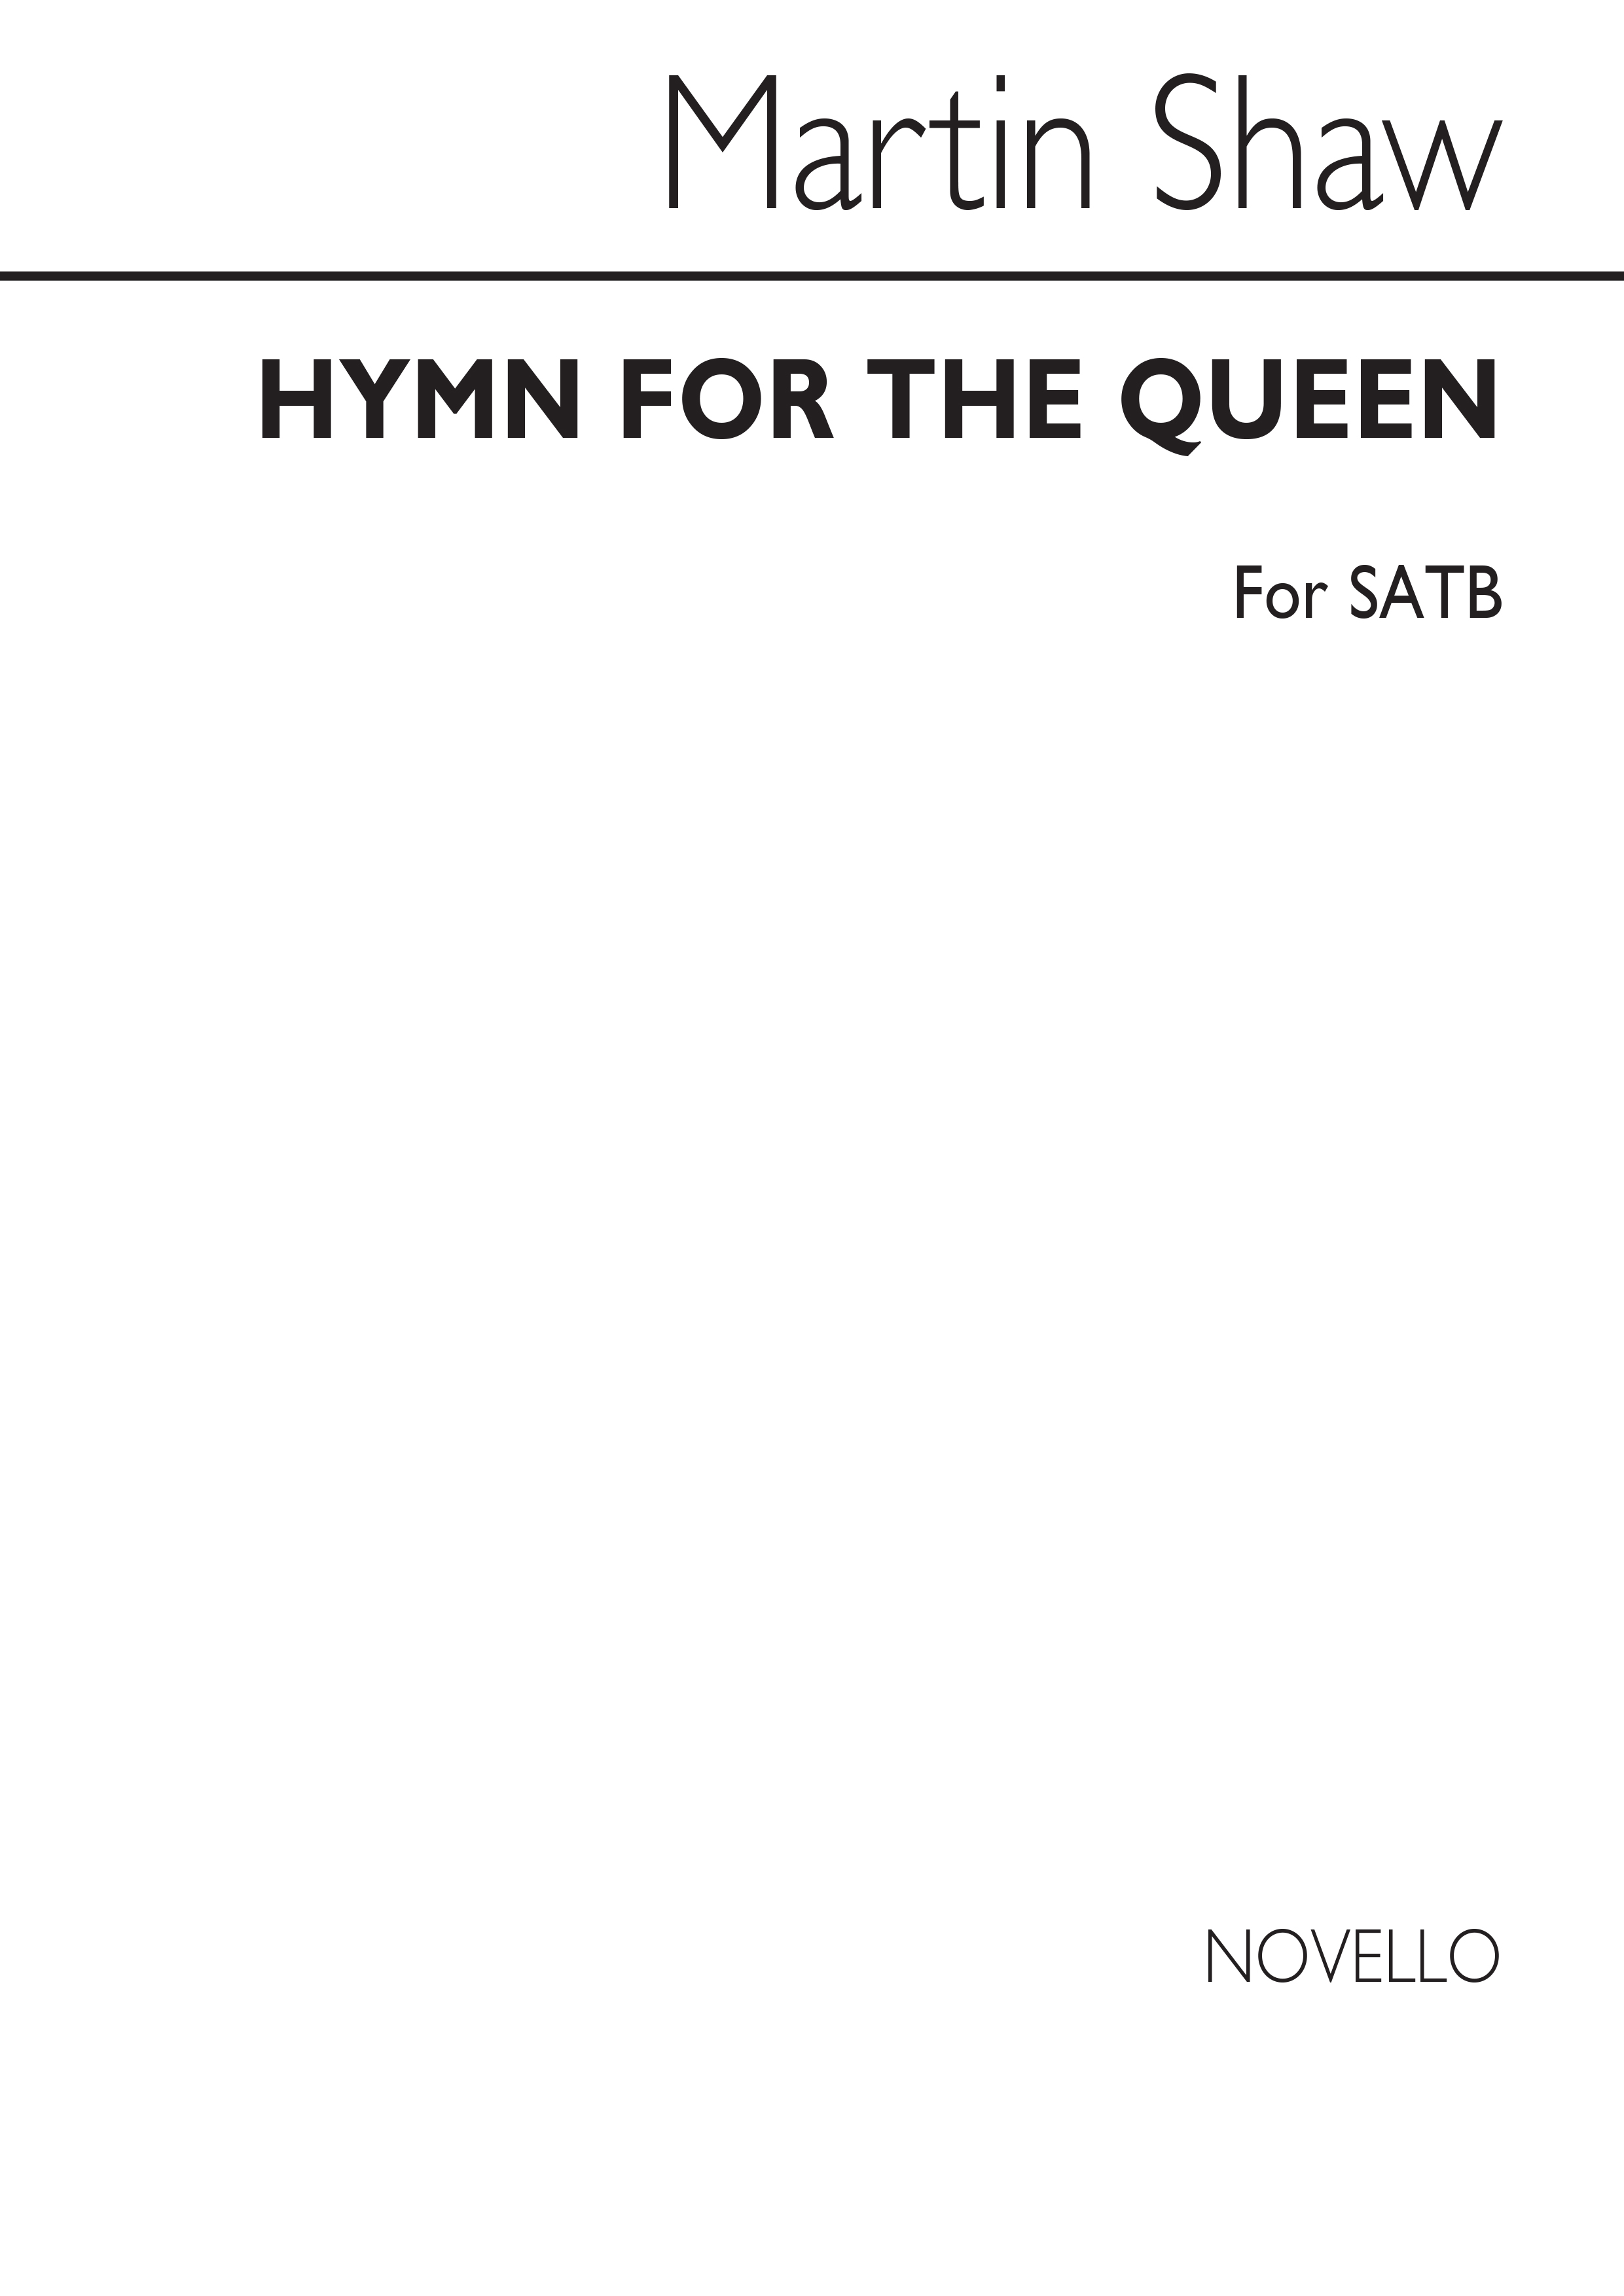 Martin Shaw: Hymn For The Queen for SATB Chorus